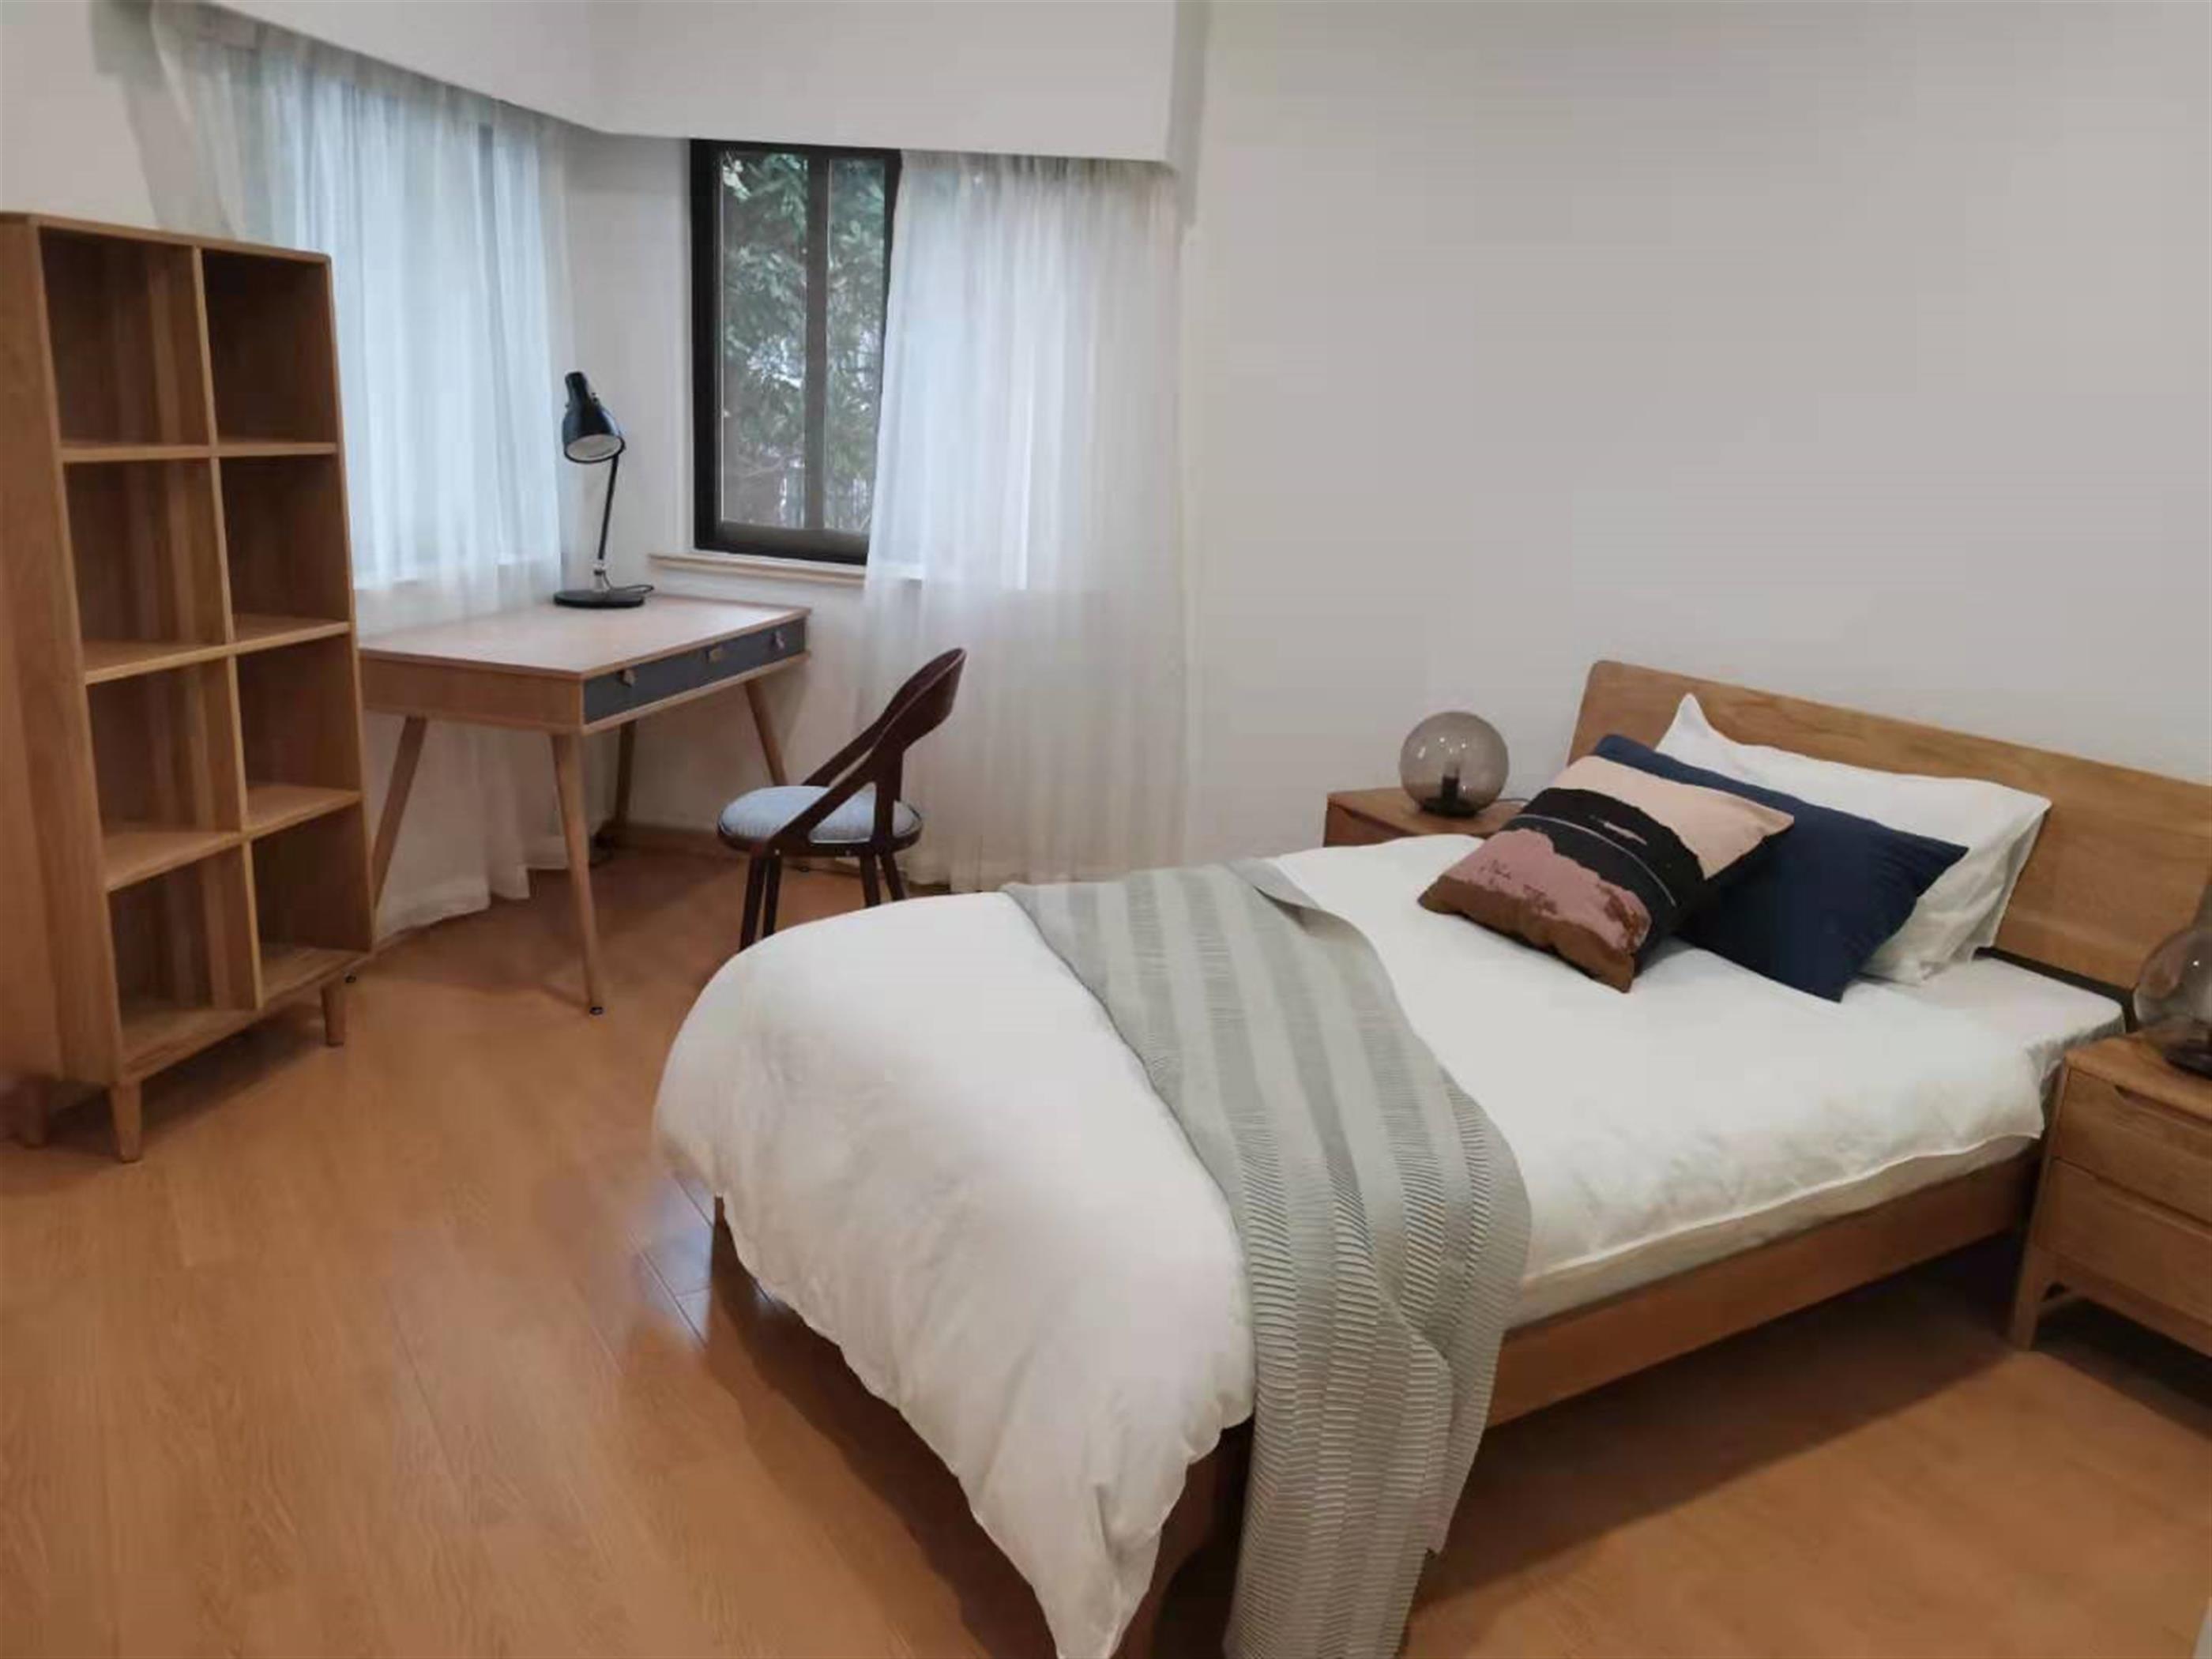 bedroom Spacious Bright Convenient 3BR Villa nr LN 10 for Rent near Shanghai Zoo